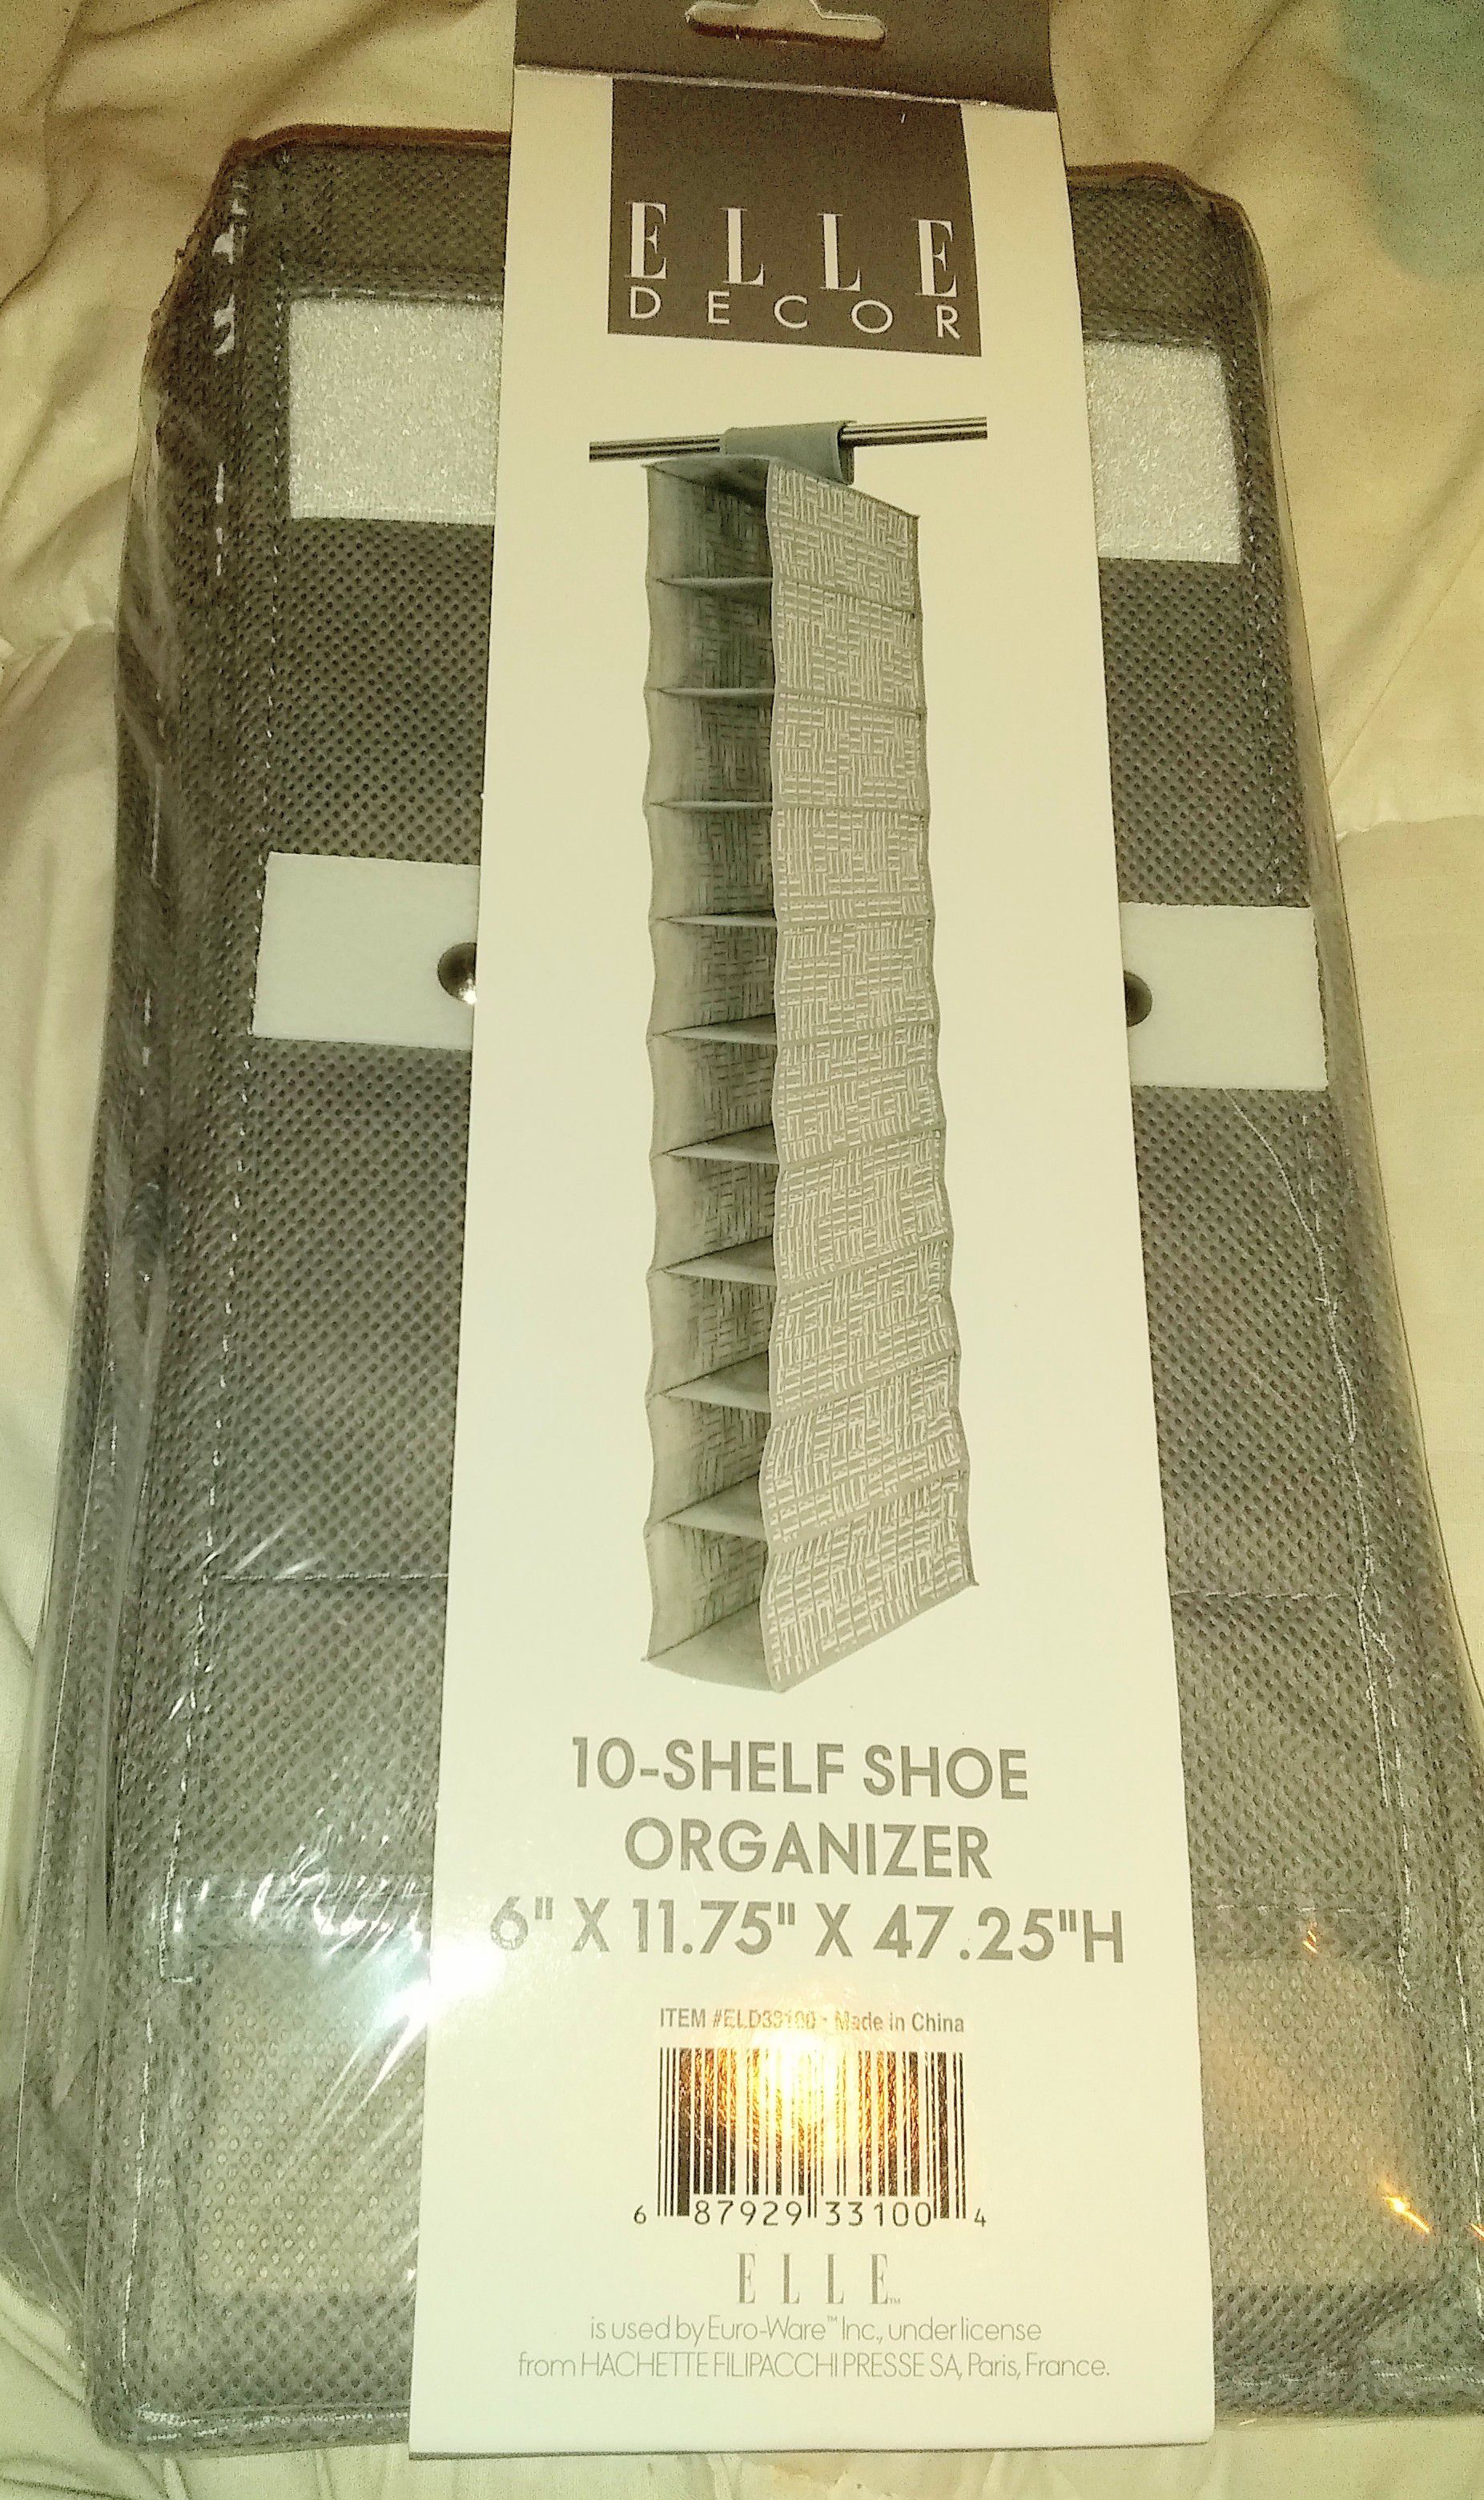 Shelf shoe organizer 6x11.75x47.25 Elle brand new grey and white